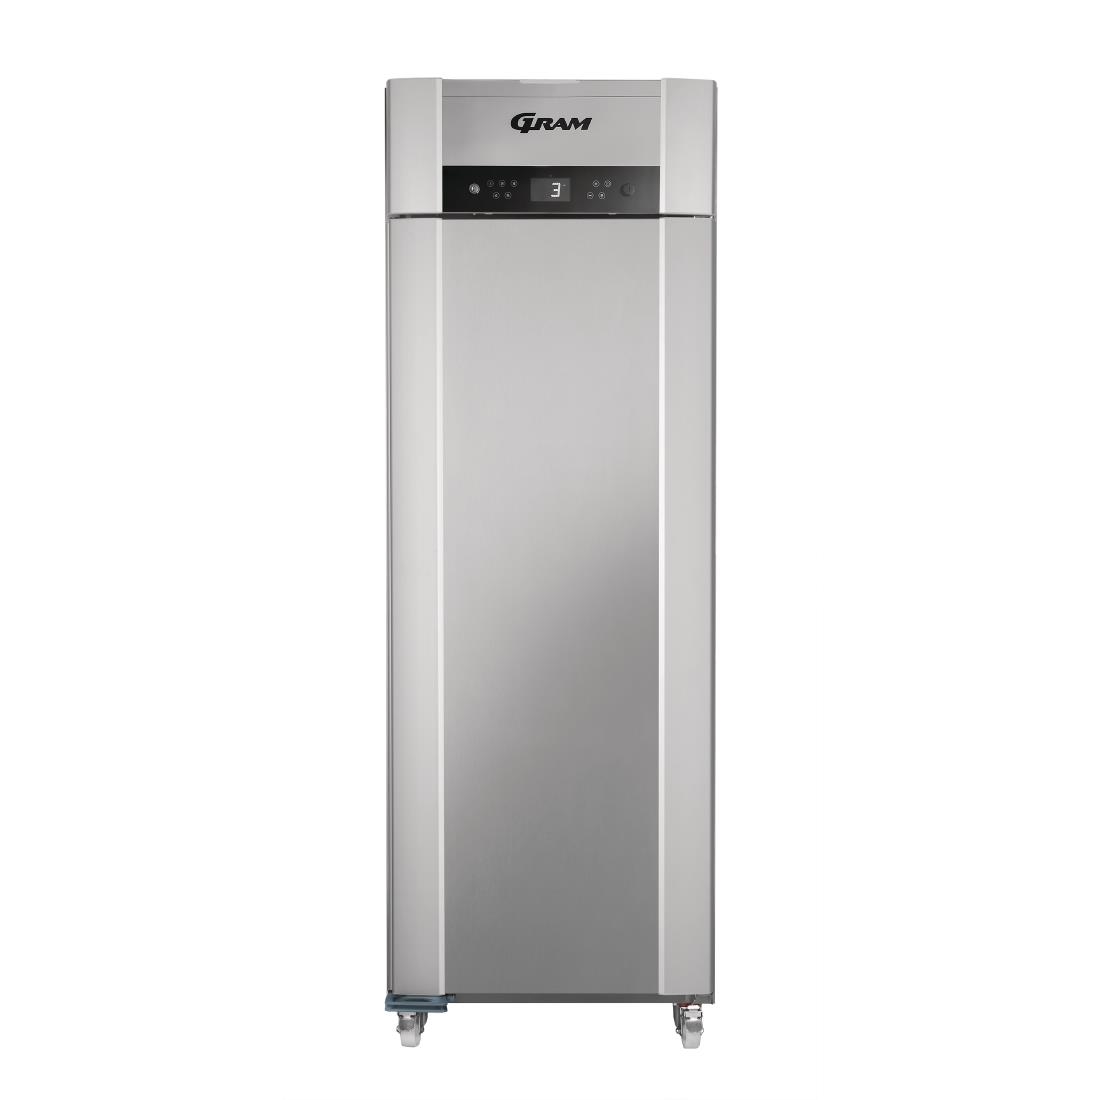 GRAM Superior Plus Upright Refrigerator 601Ltr K72 CCG C1 4S